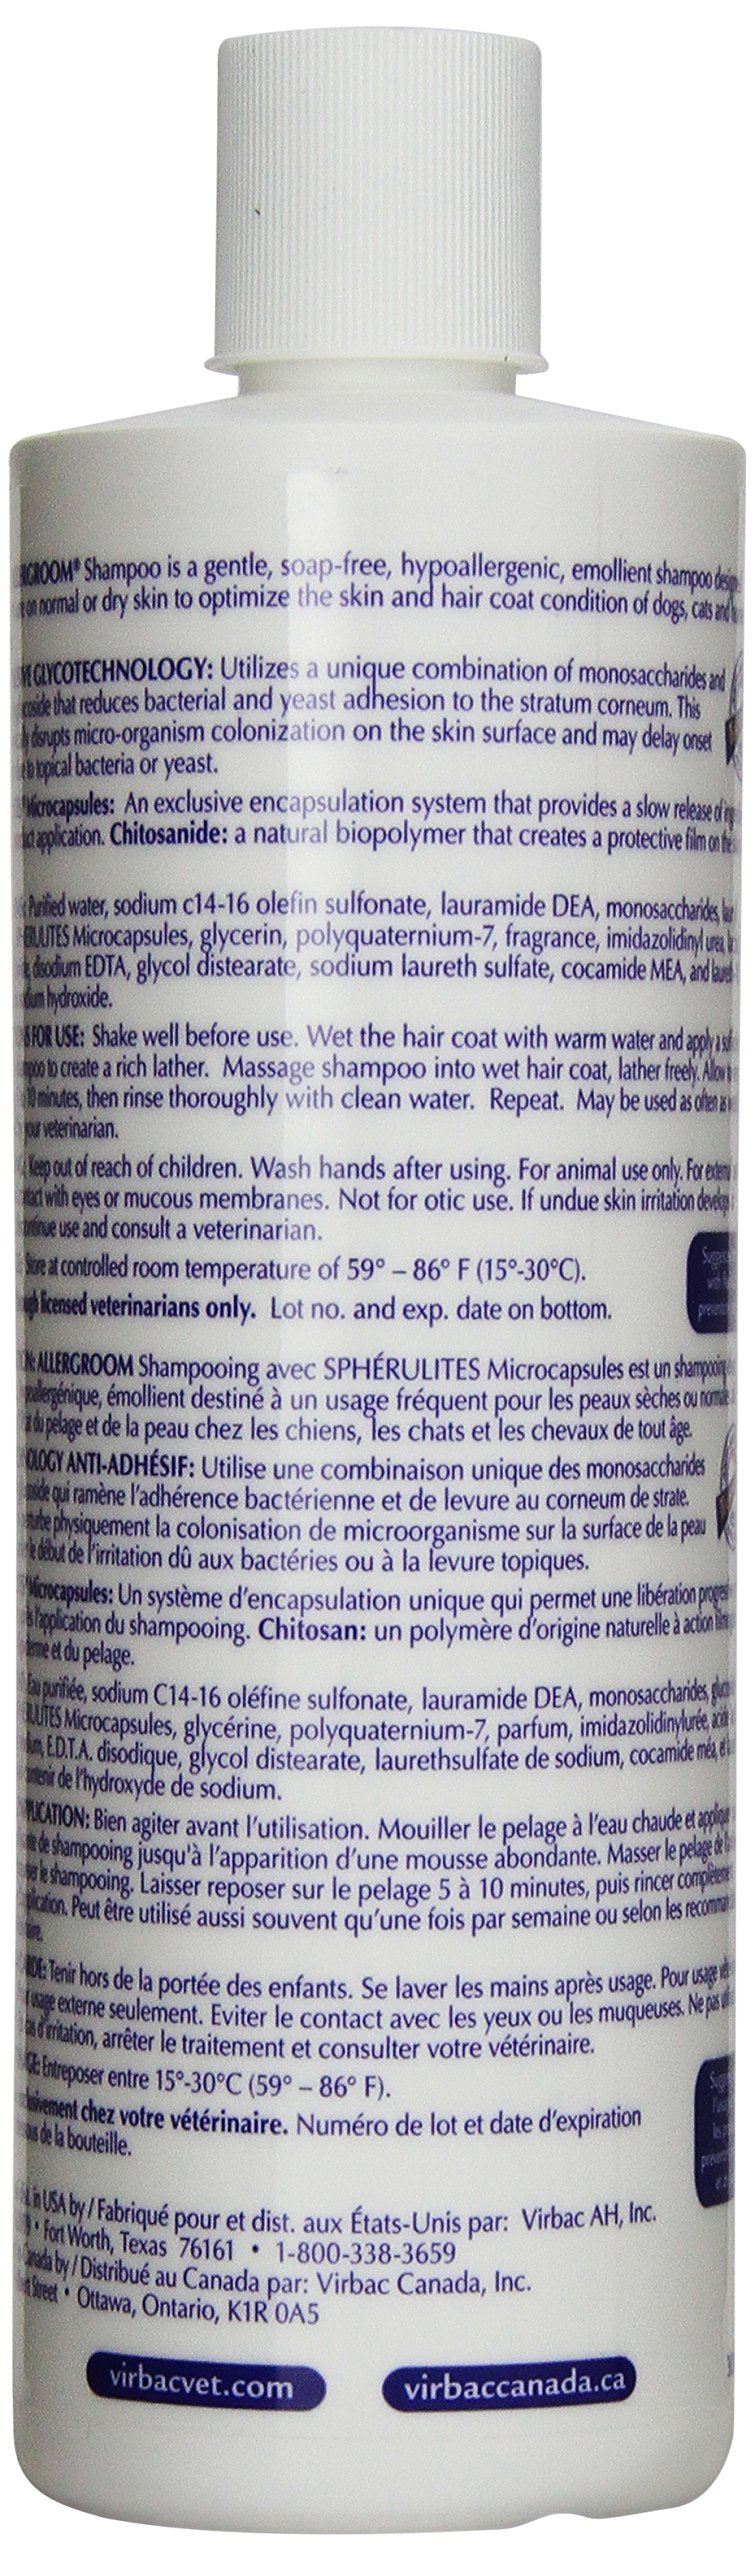 [Australia] - Virbac Allergroom Shampoo 16-Ounce 